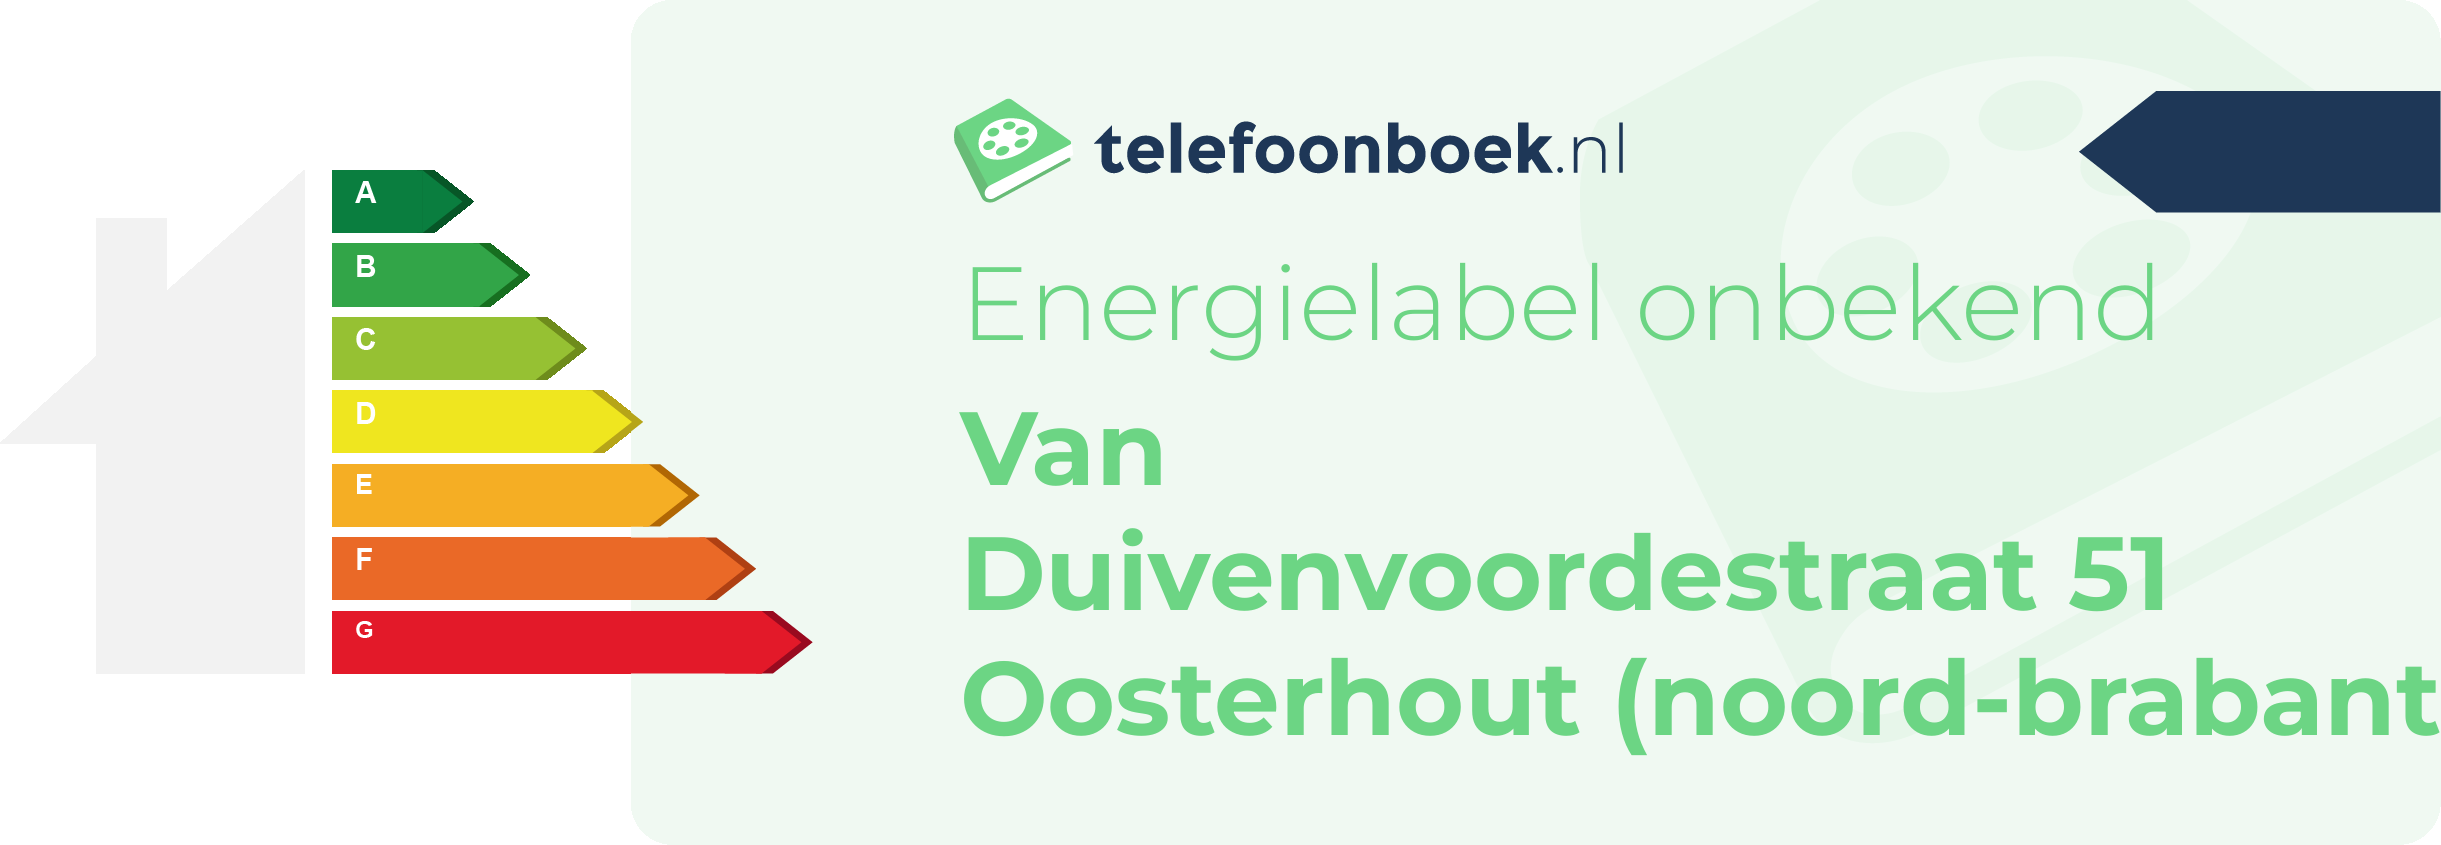 Energielabel Van Duivenvoordestraat 51 Oosterhout (Noord-Brabant)